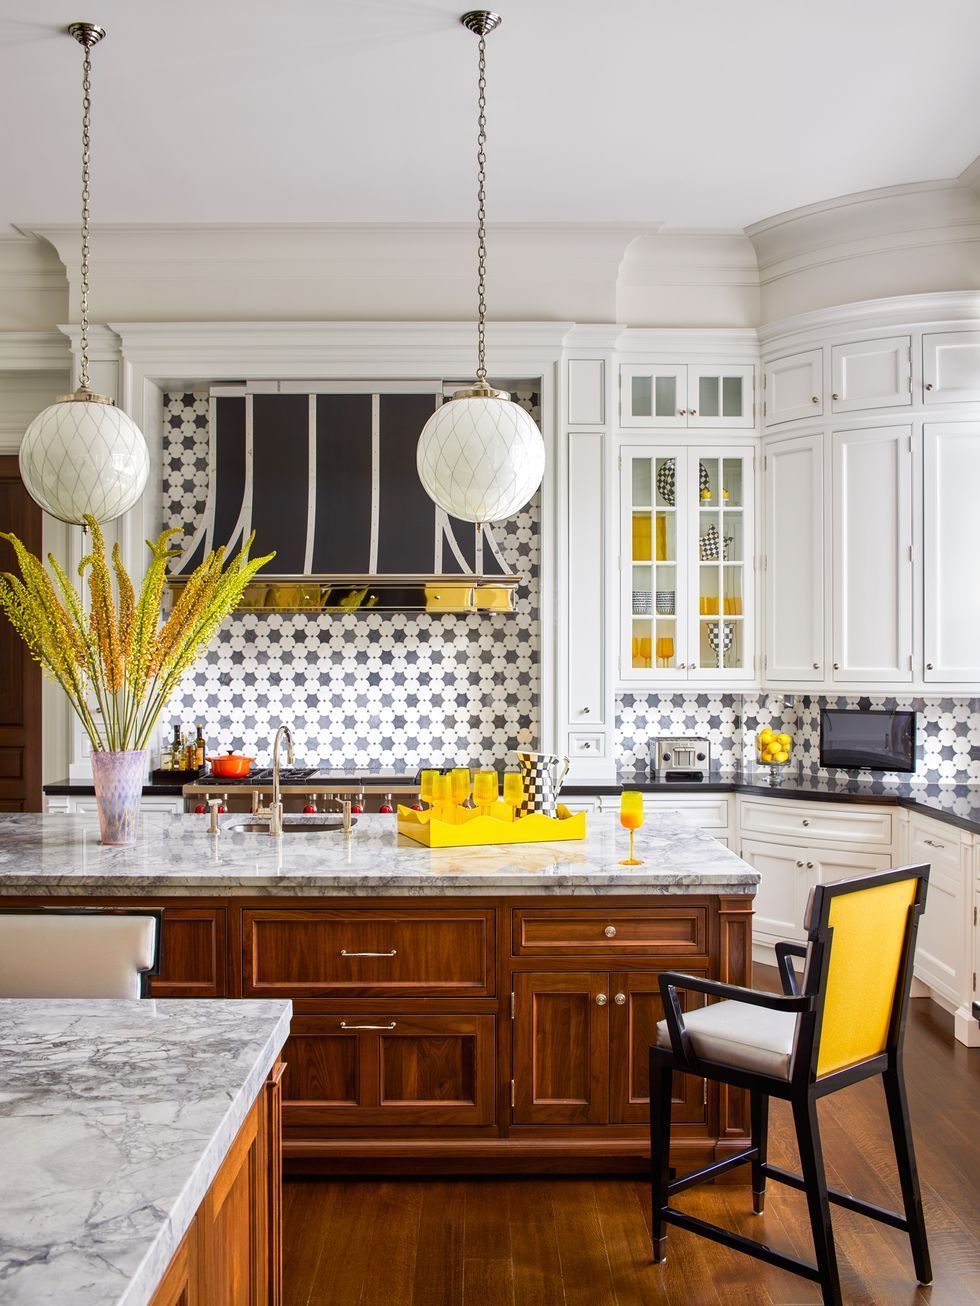 51 Gorgeous Kitchen Backsplash Ideas, Tile Backsplash For Kitchen